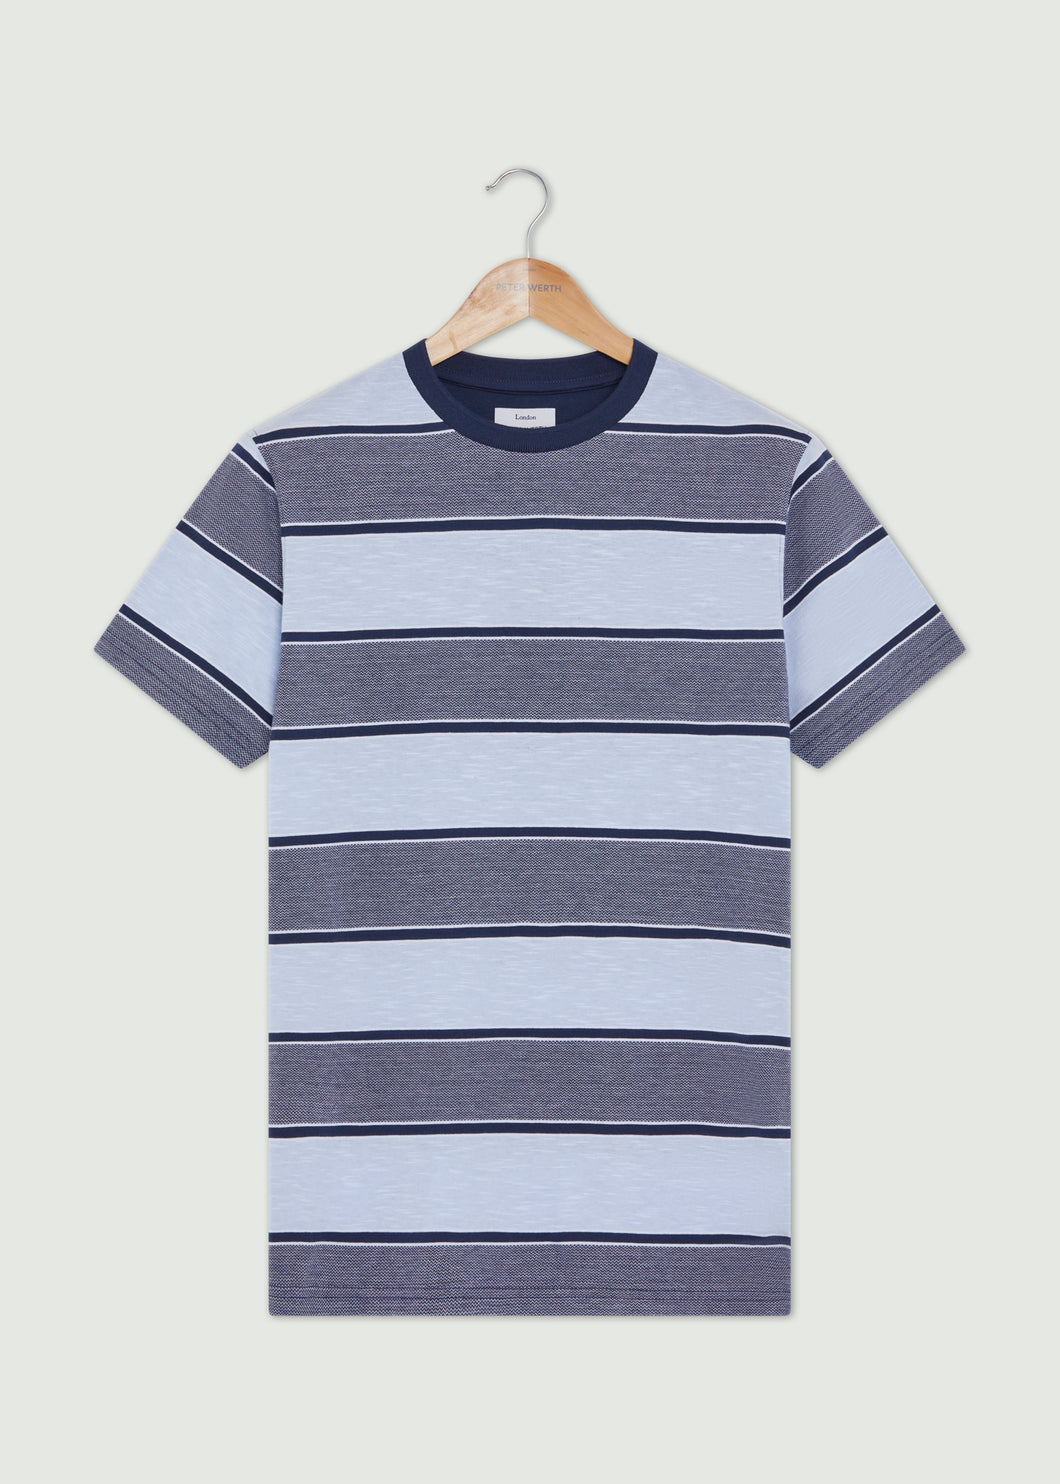 Earsby T-Shirt - Navy/Light Blue